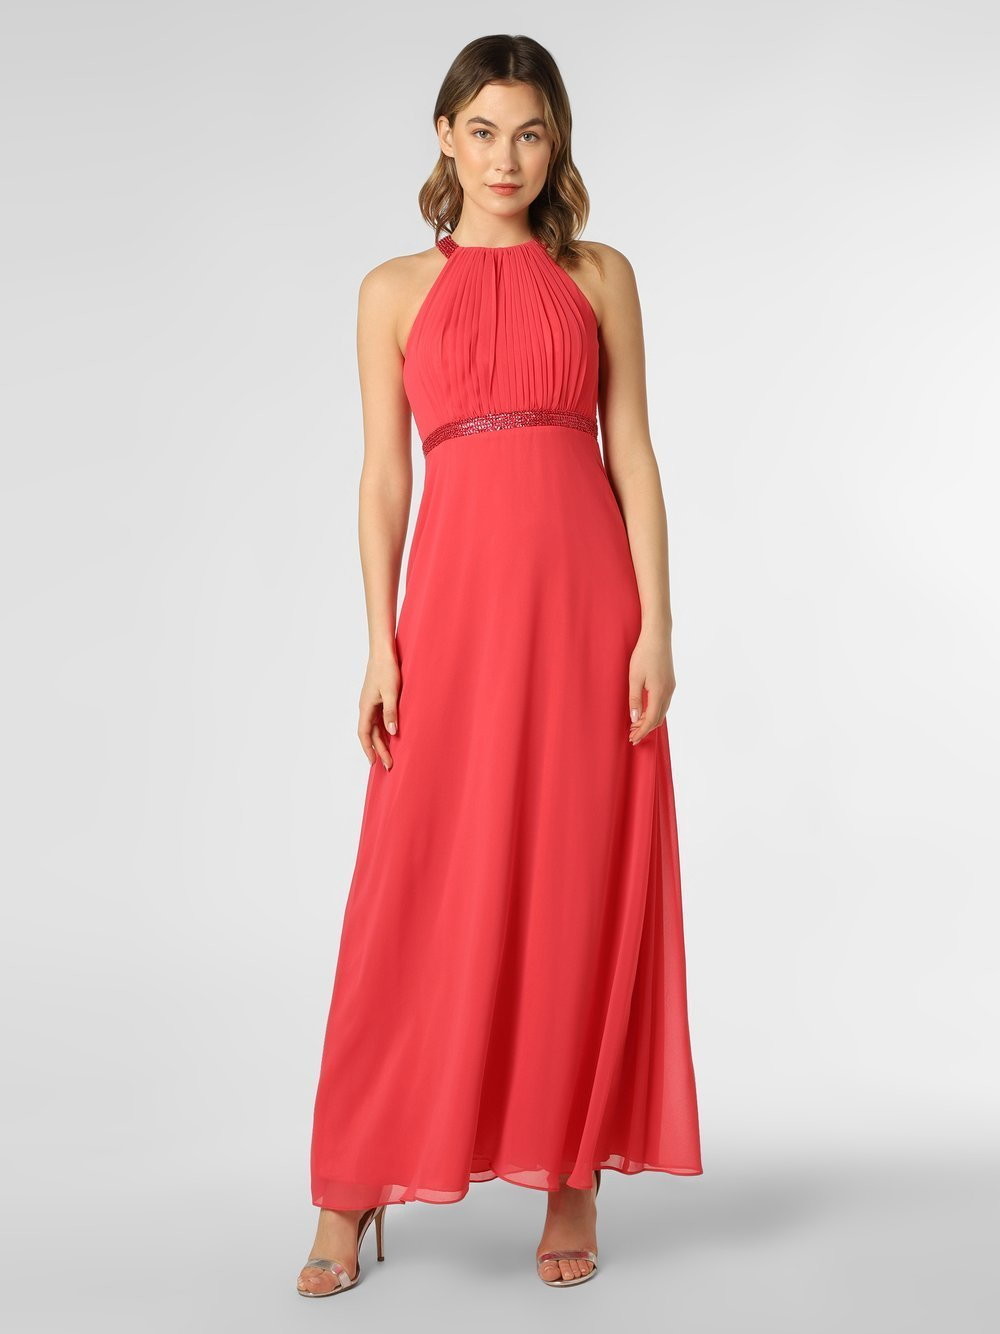 VM VM - Damska sukienka wieczorowa, różowy